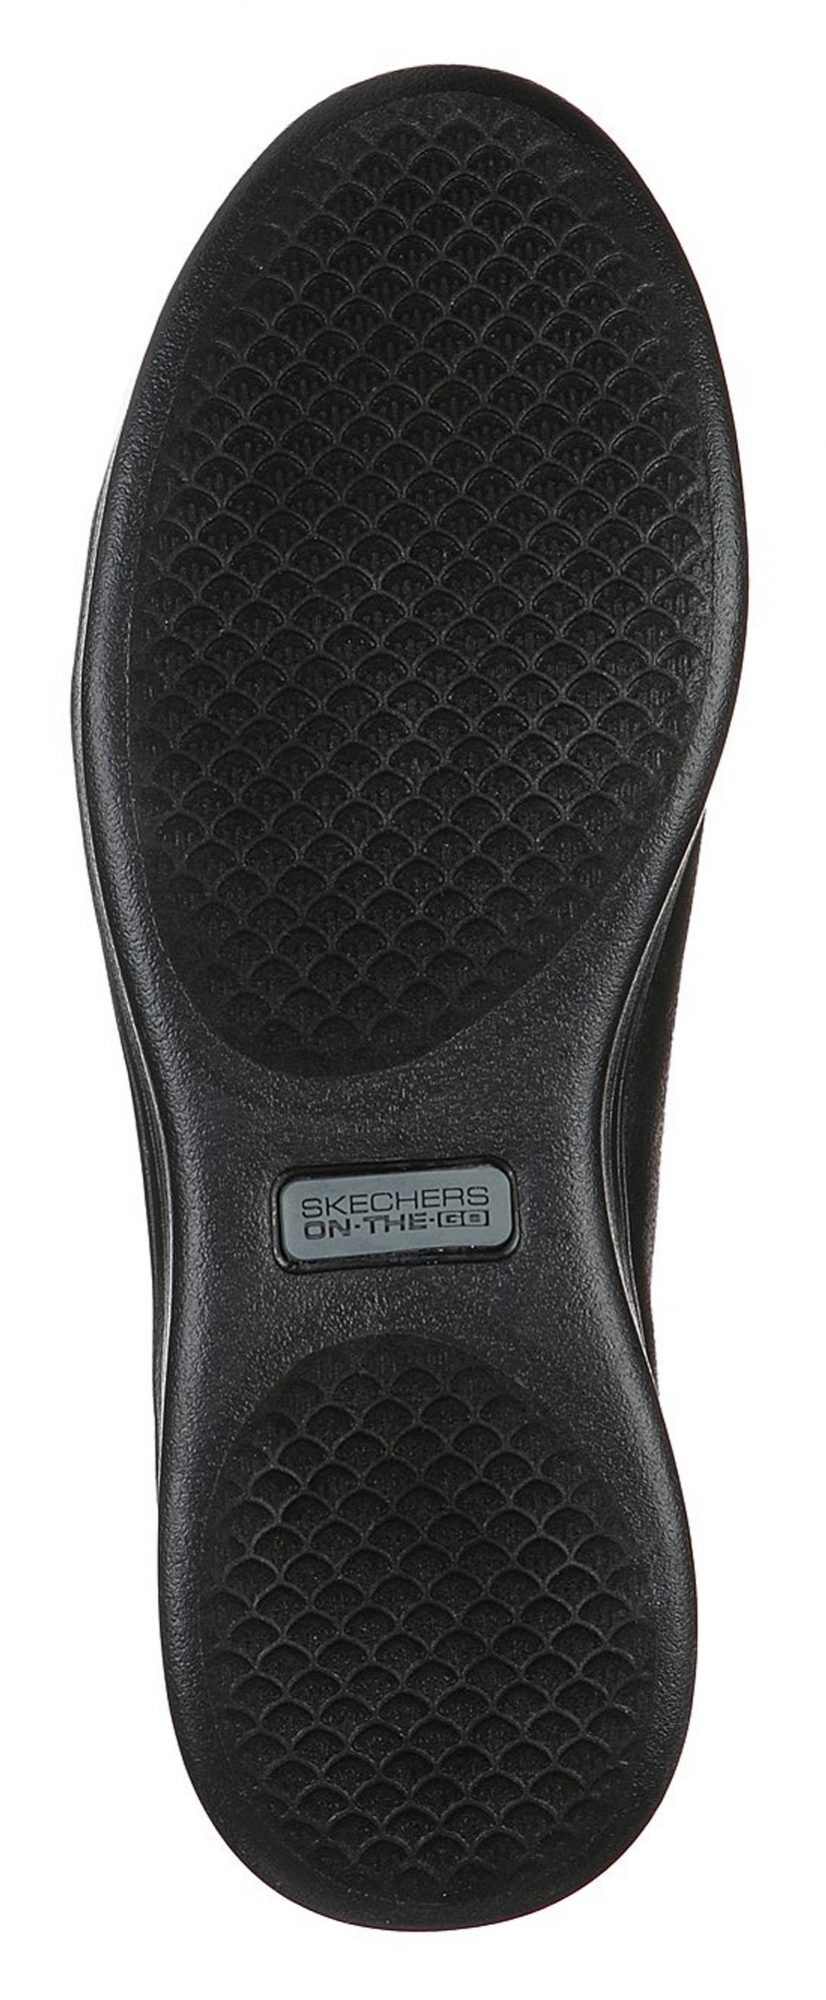 Skechers On the GO Dreamy - Nightout Black 136210 BBK - Everyday Shoes ...